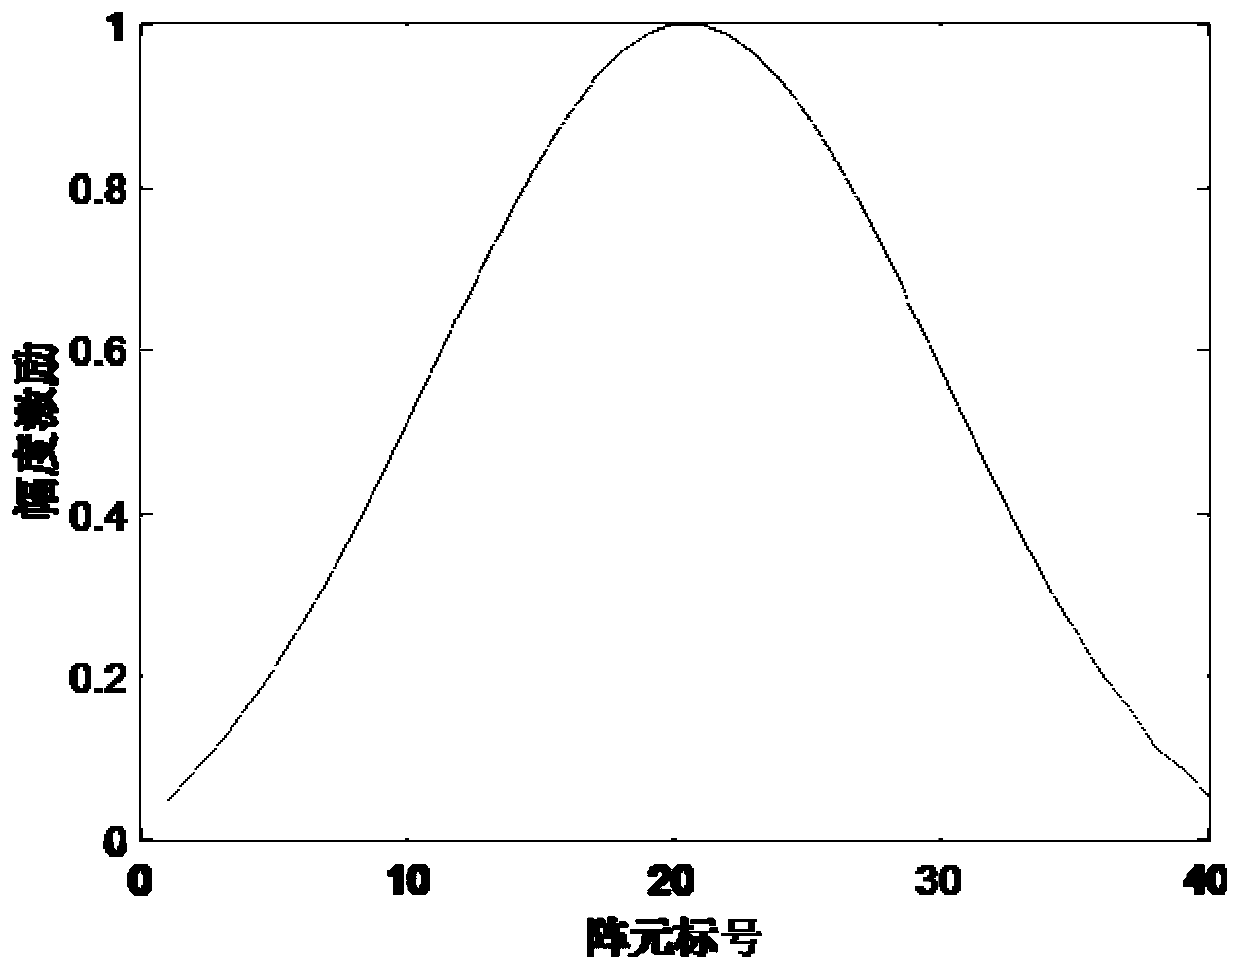 Array pattern synthesis method based on non-uniform fast Fourier transform algorithm